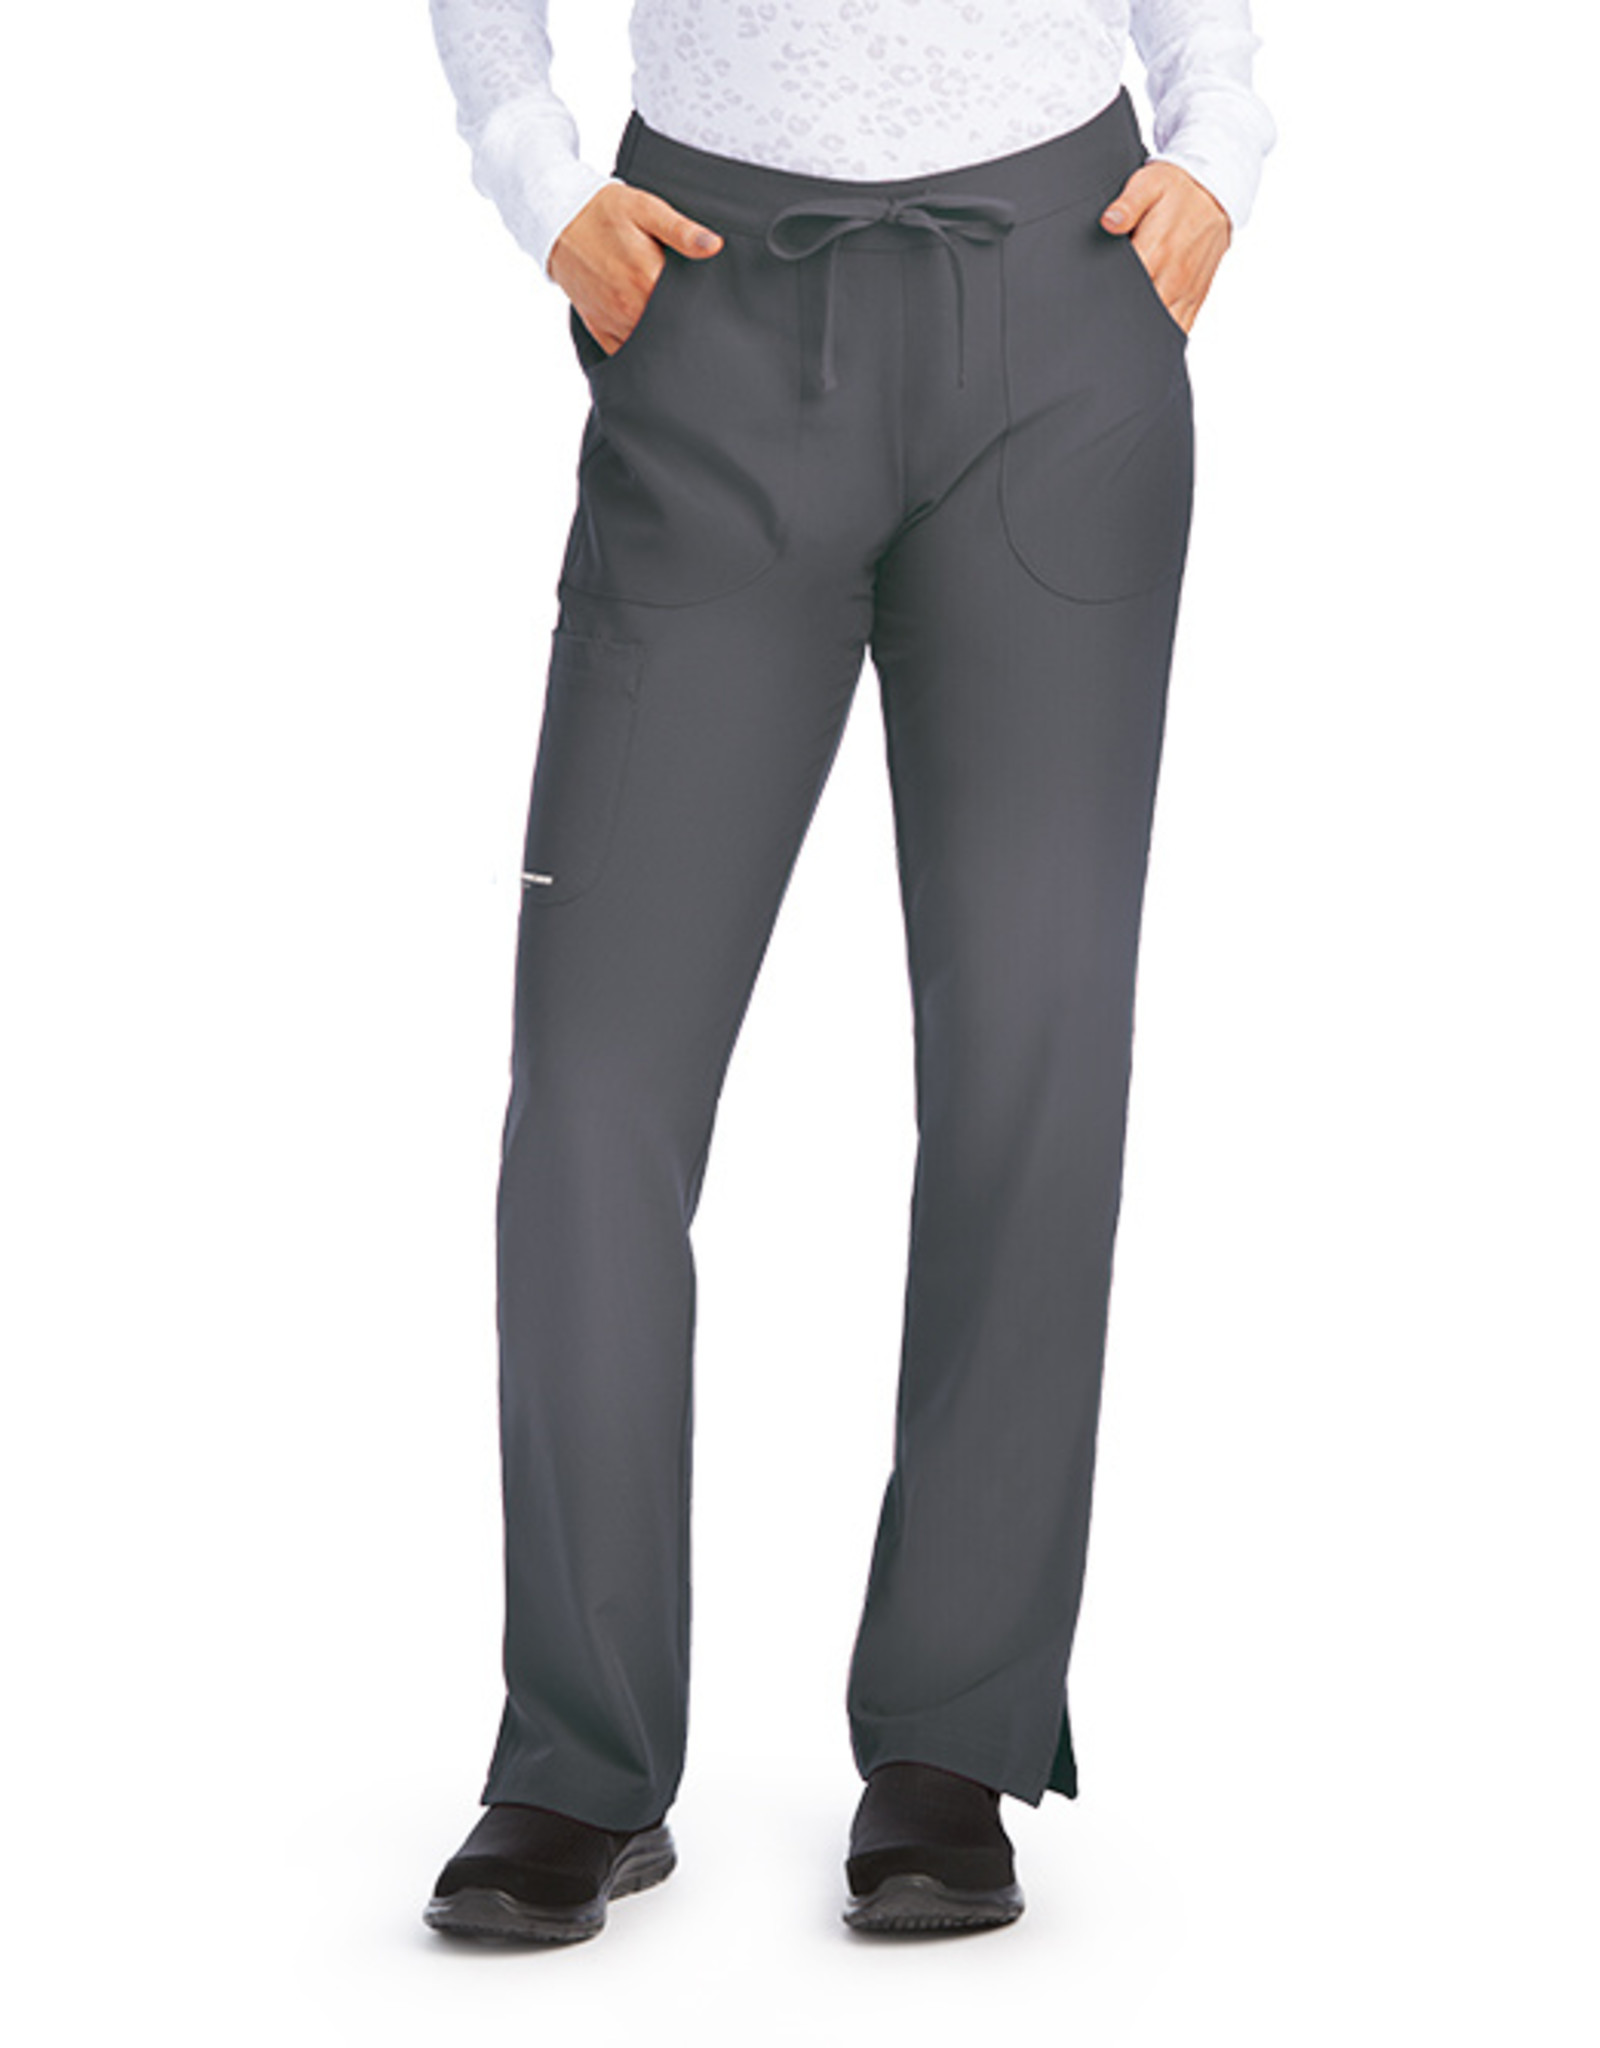 Skechers Women's Reliance 3-Pocket Pant (Petite)